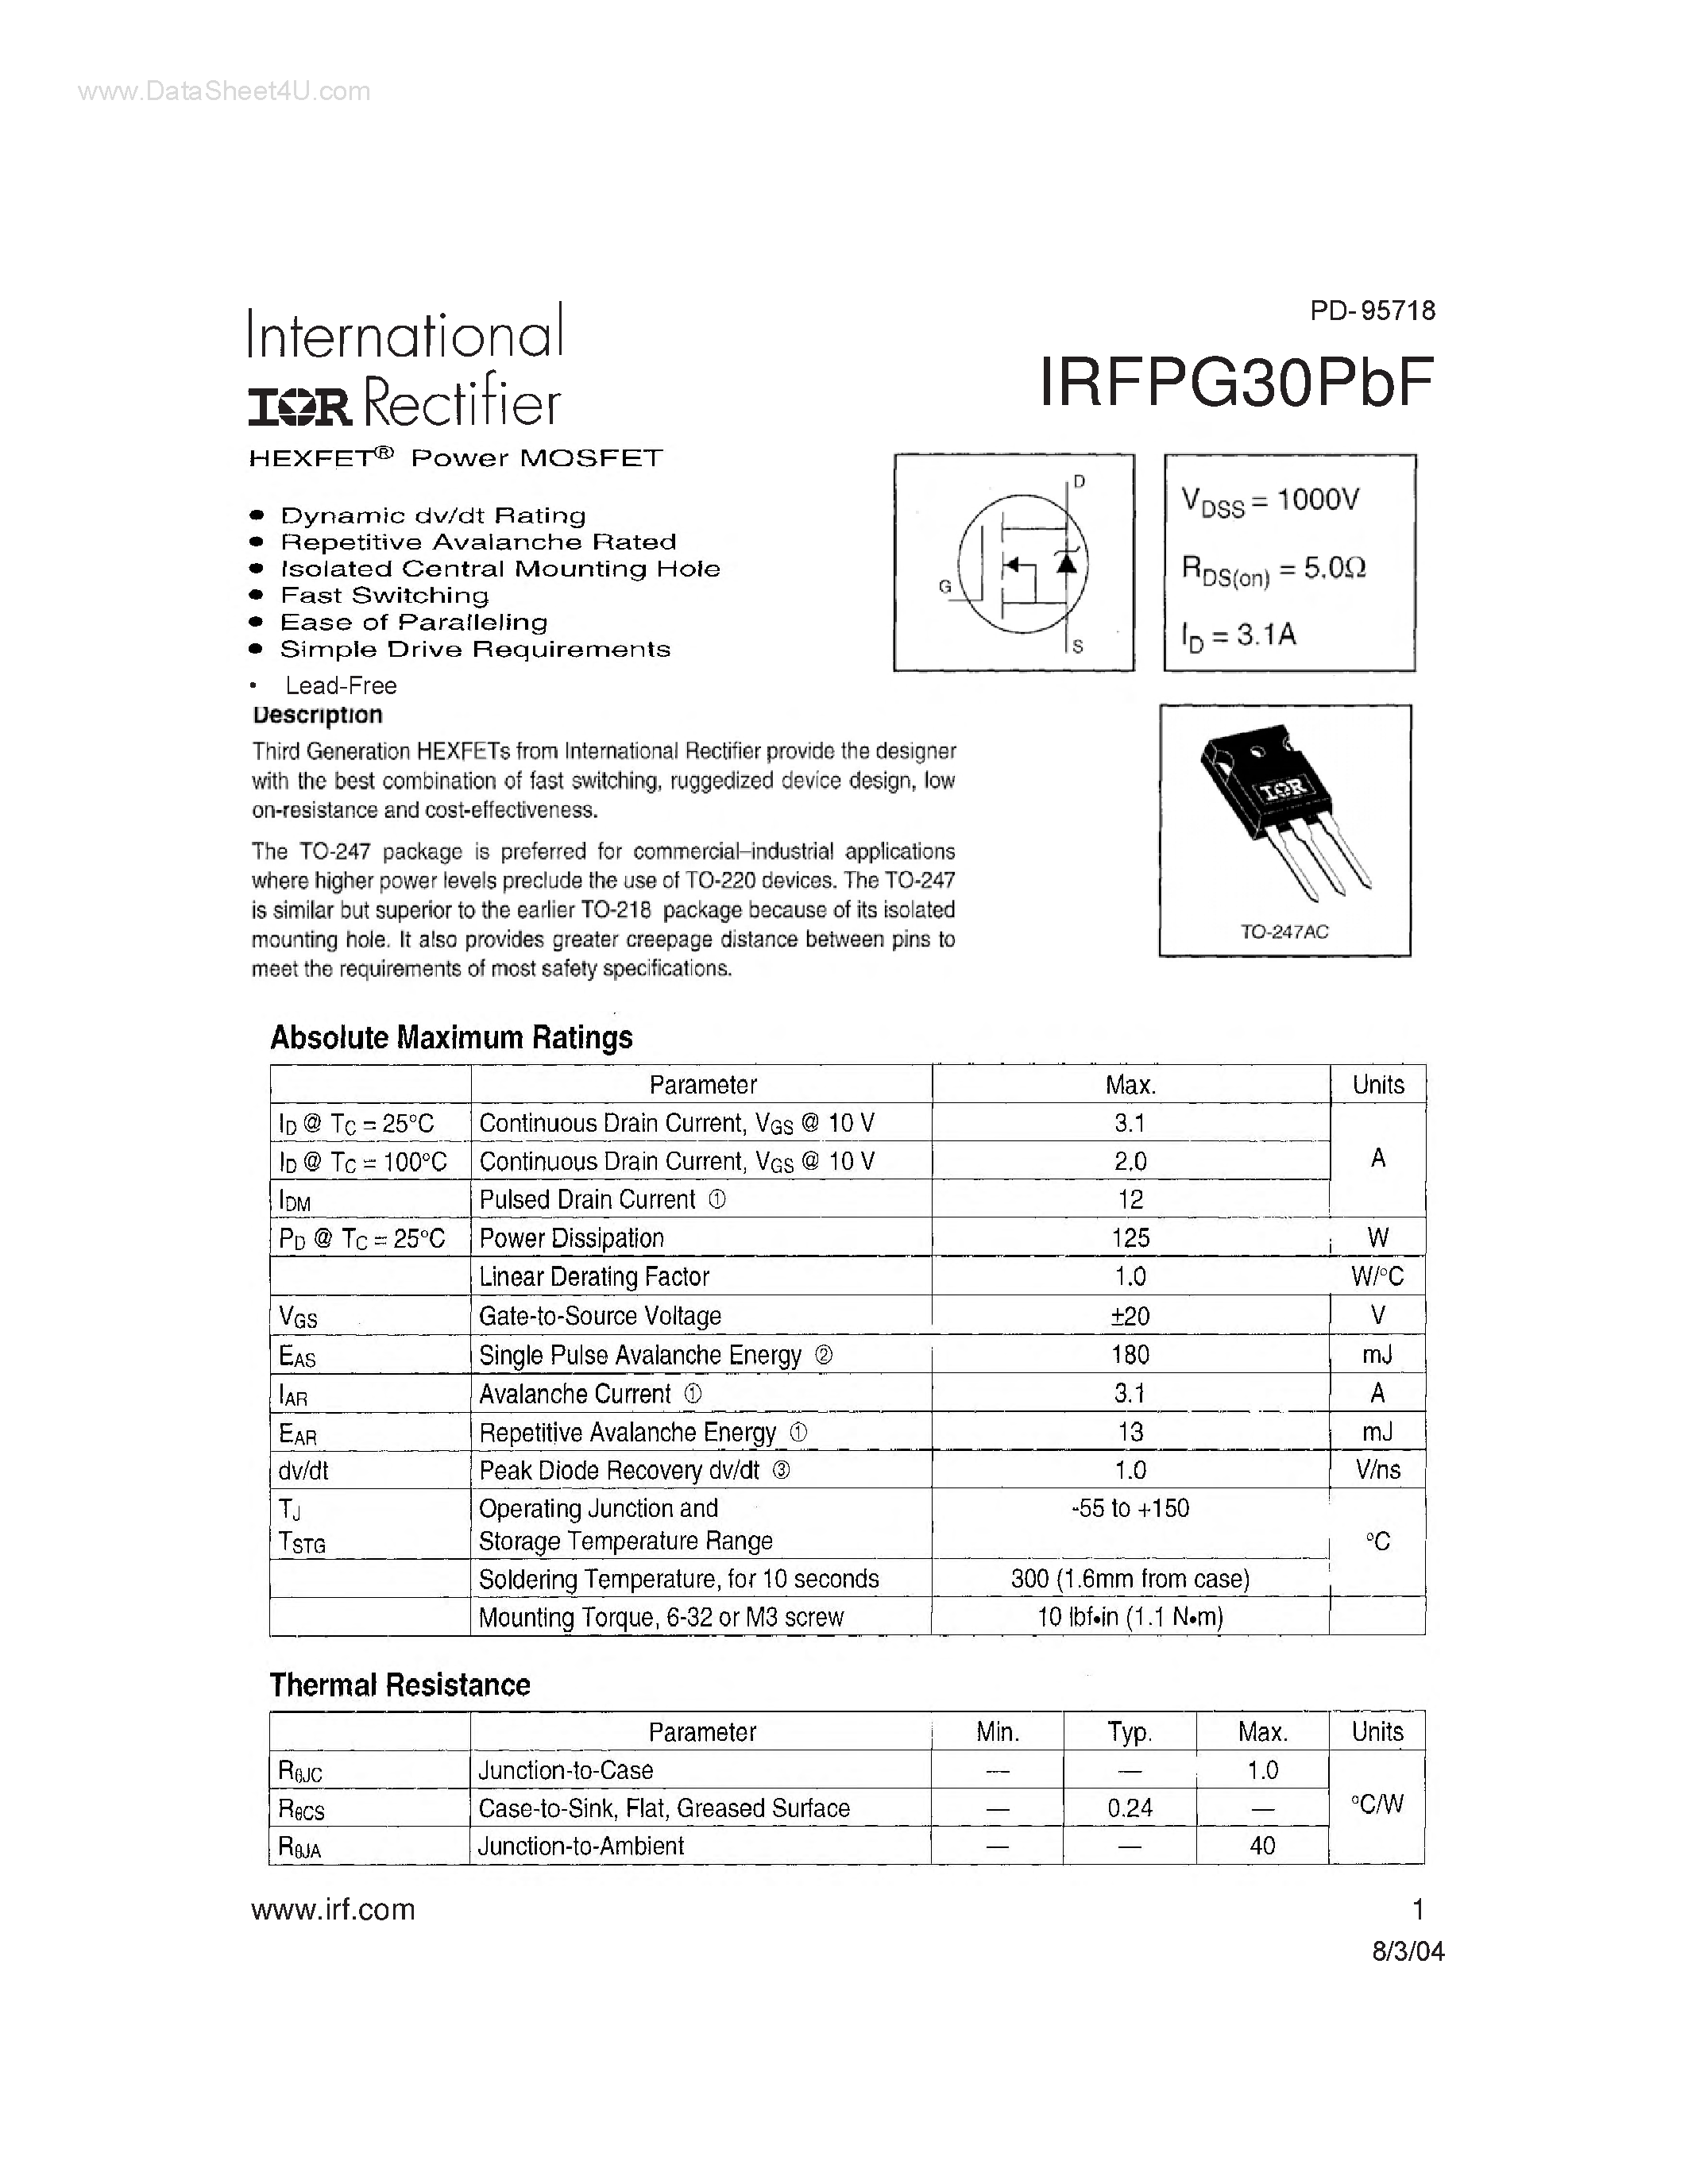 Даташит IRFPG30PBF - Power MOSFET страница 1